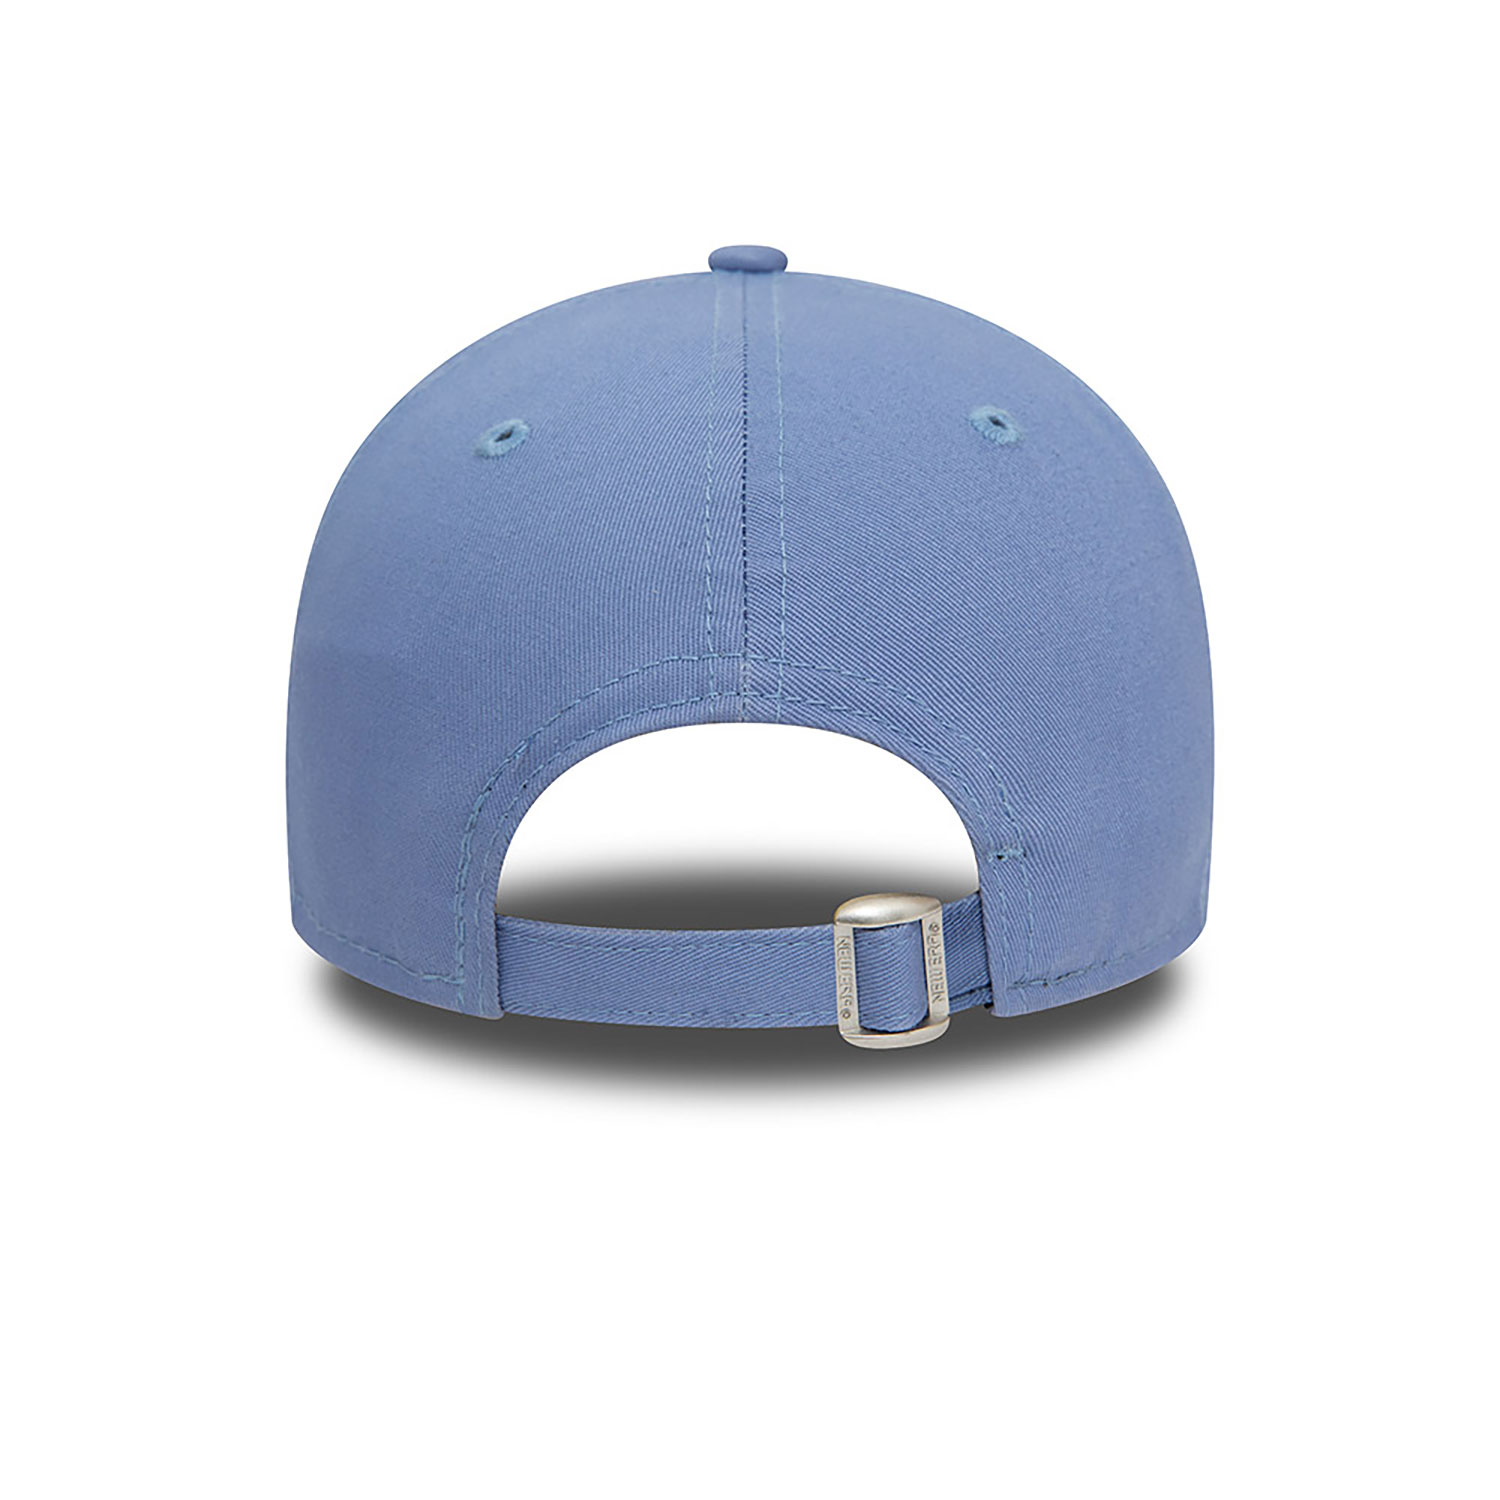 LA Dodgers Style Activist Blue 9TWENTY Adjustable Cap